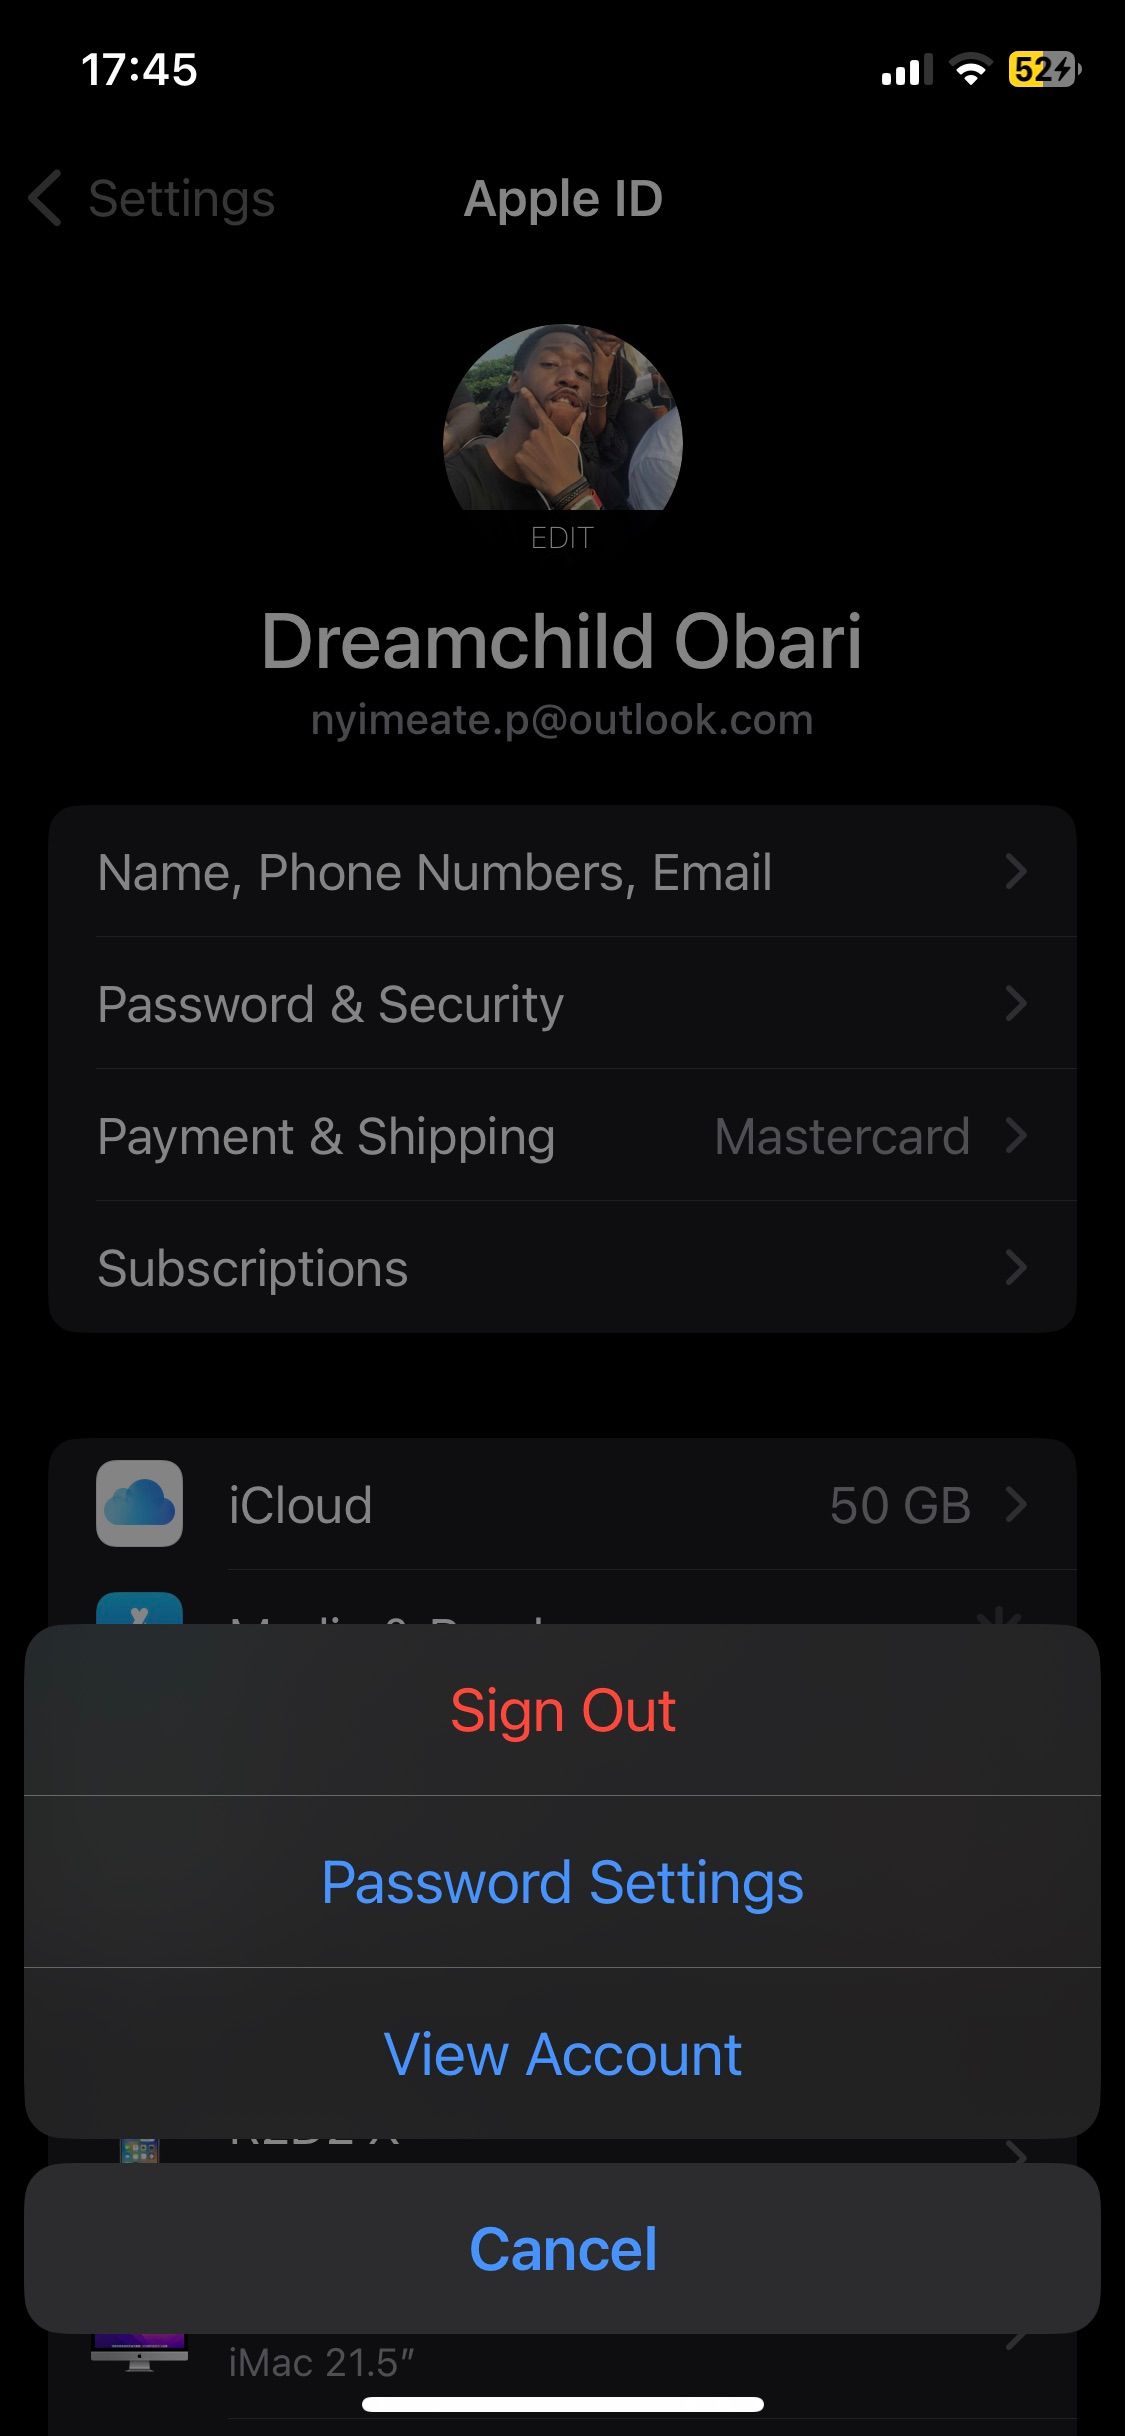 Media & Purchases sub-settings in Apple ID menu on iOS Settings